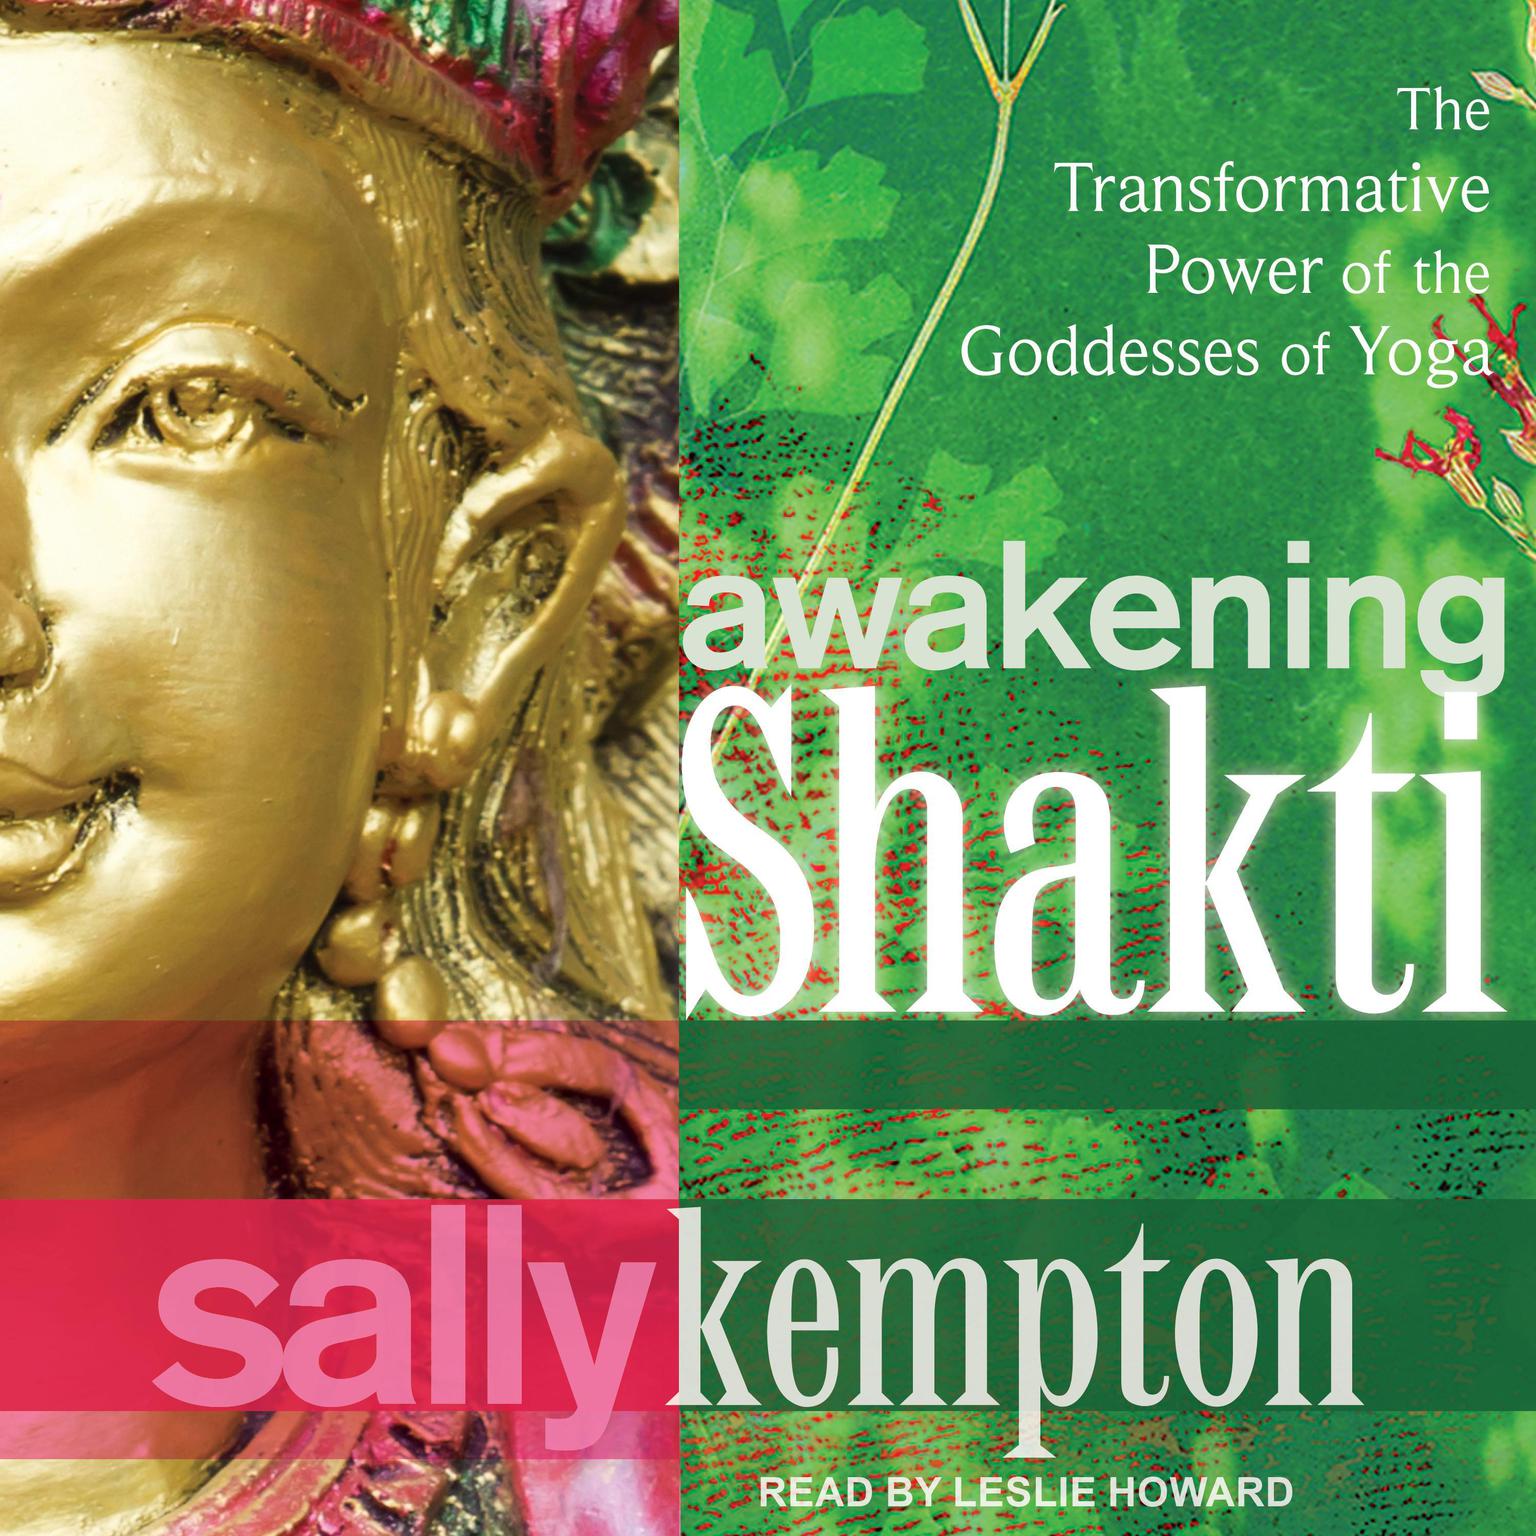 Awakening Shakti: The Transformative Power of the Goddesses of Yoga Audiobook, by Sally Kempton